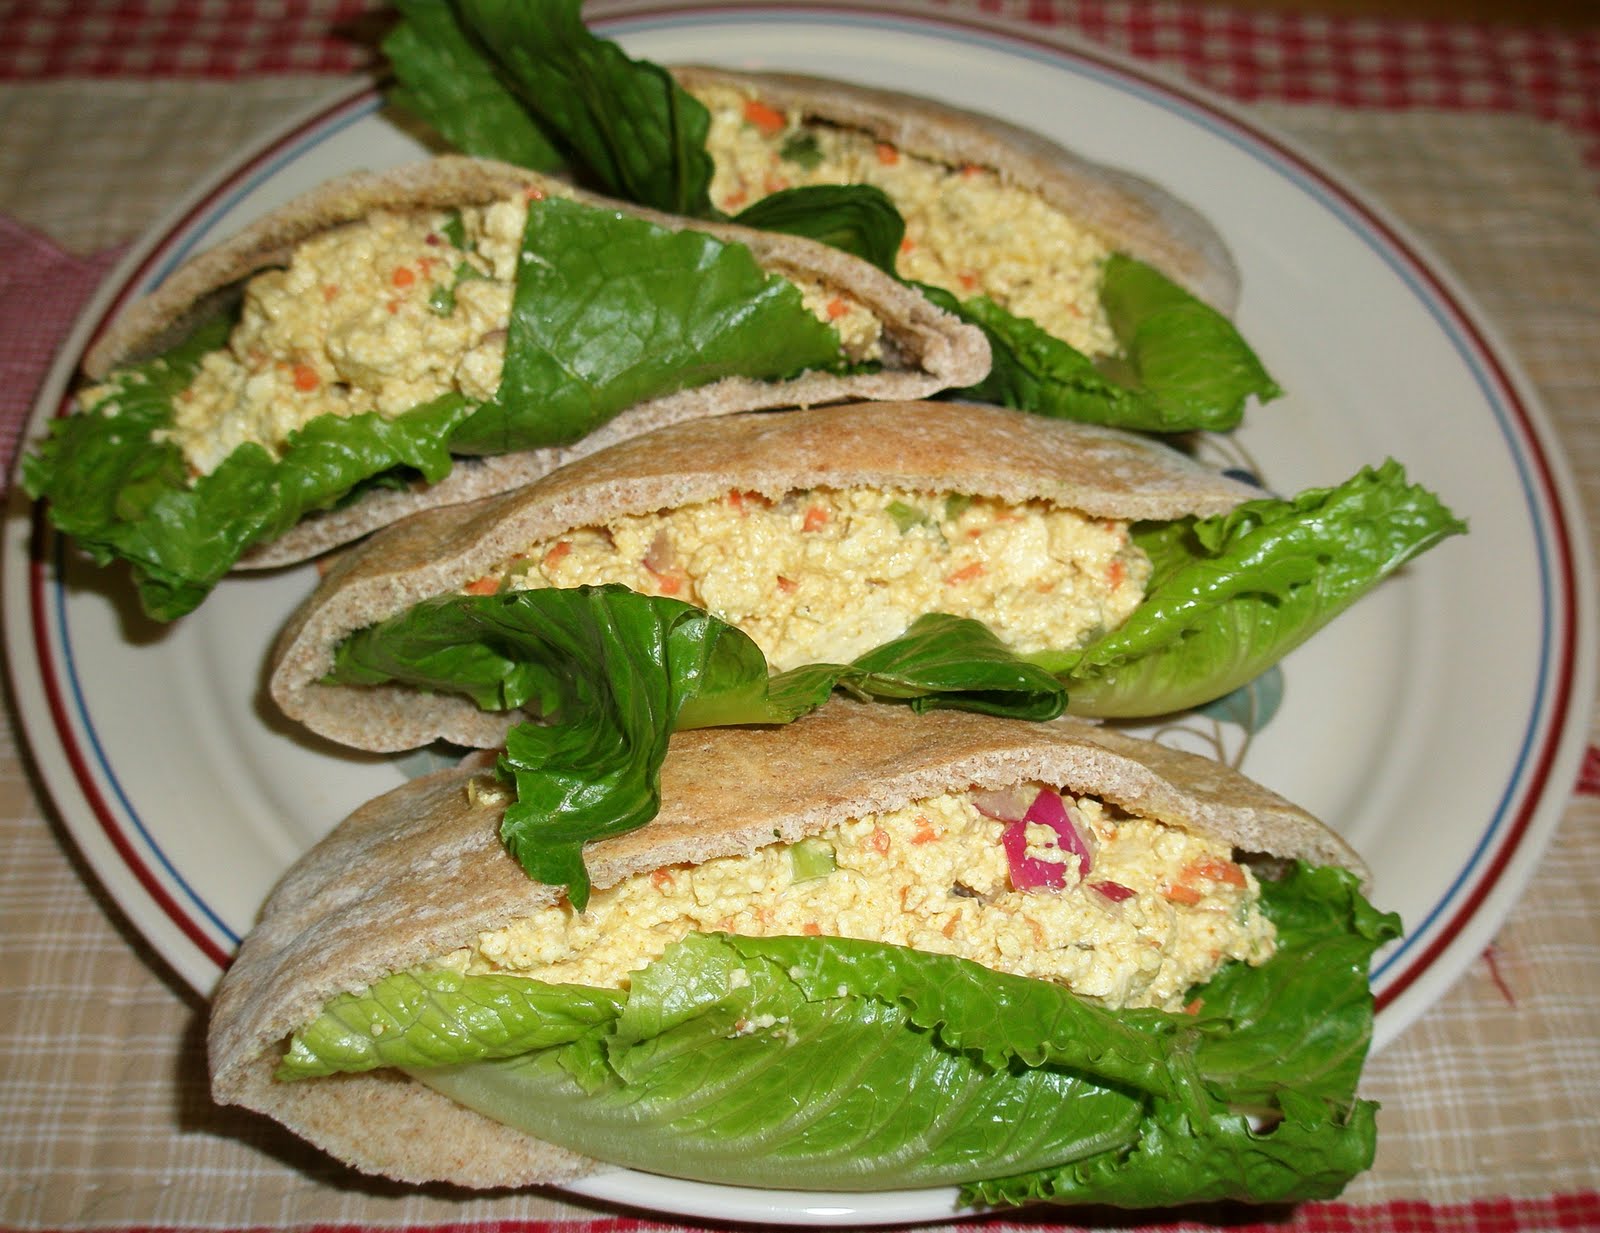 Curried tofu “egg salad” pitas